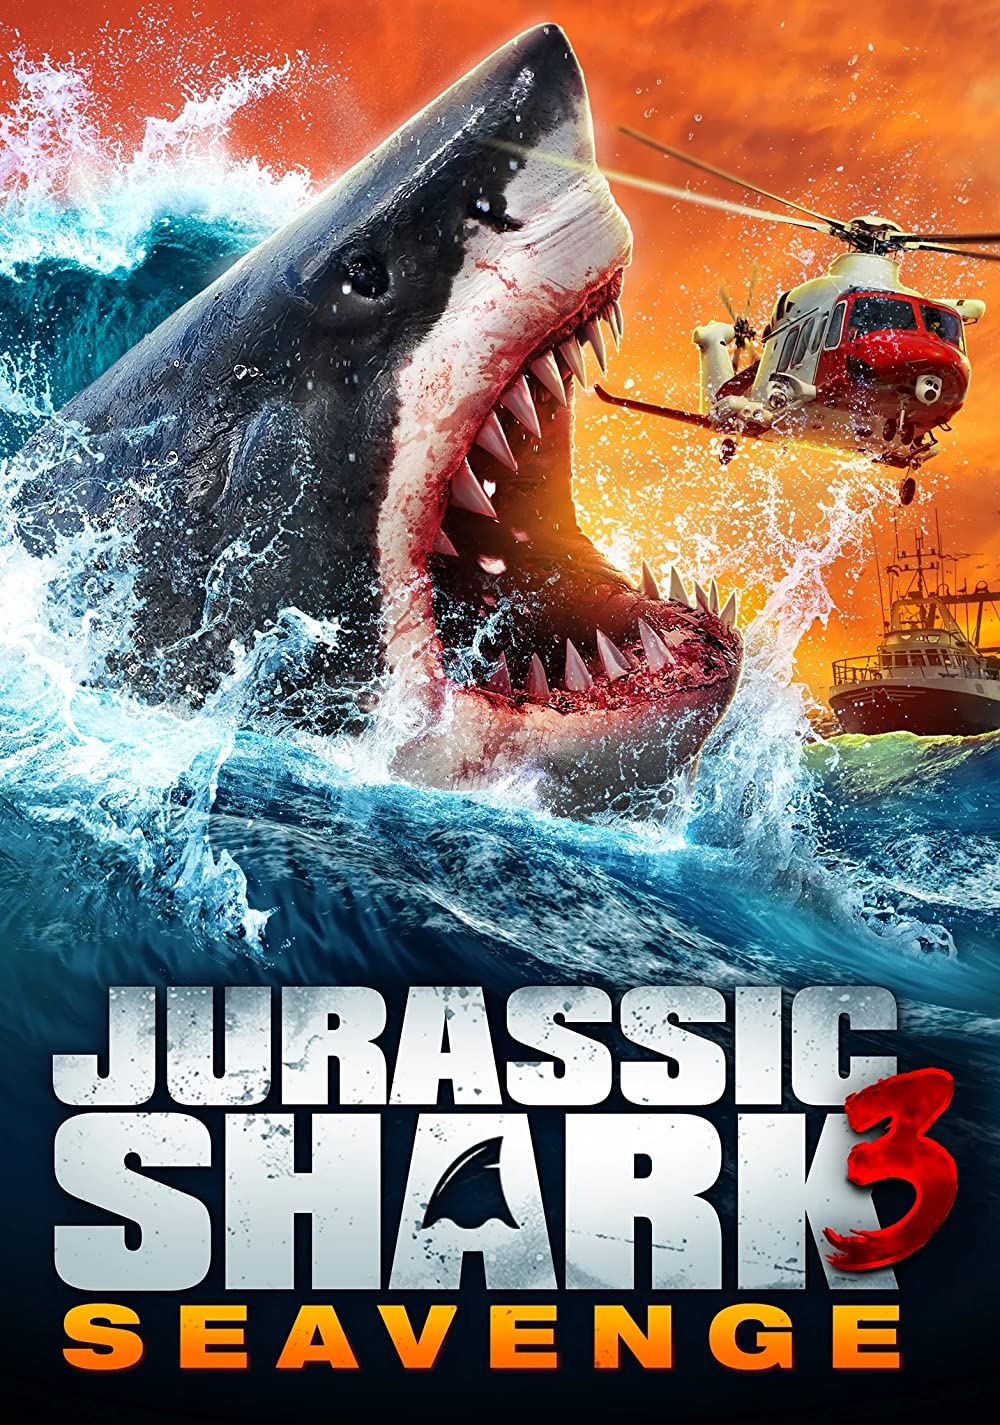 Jurassic Shark 3 Poster